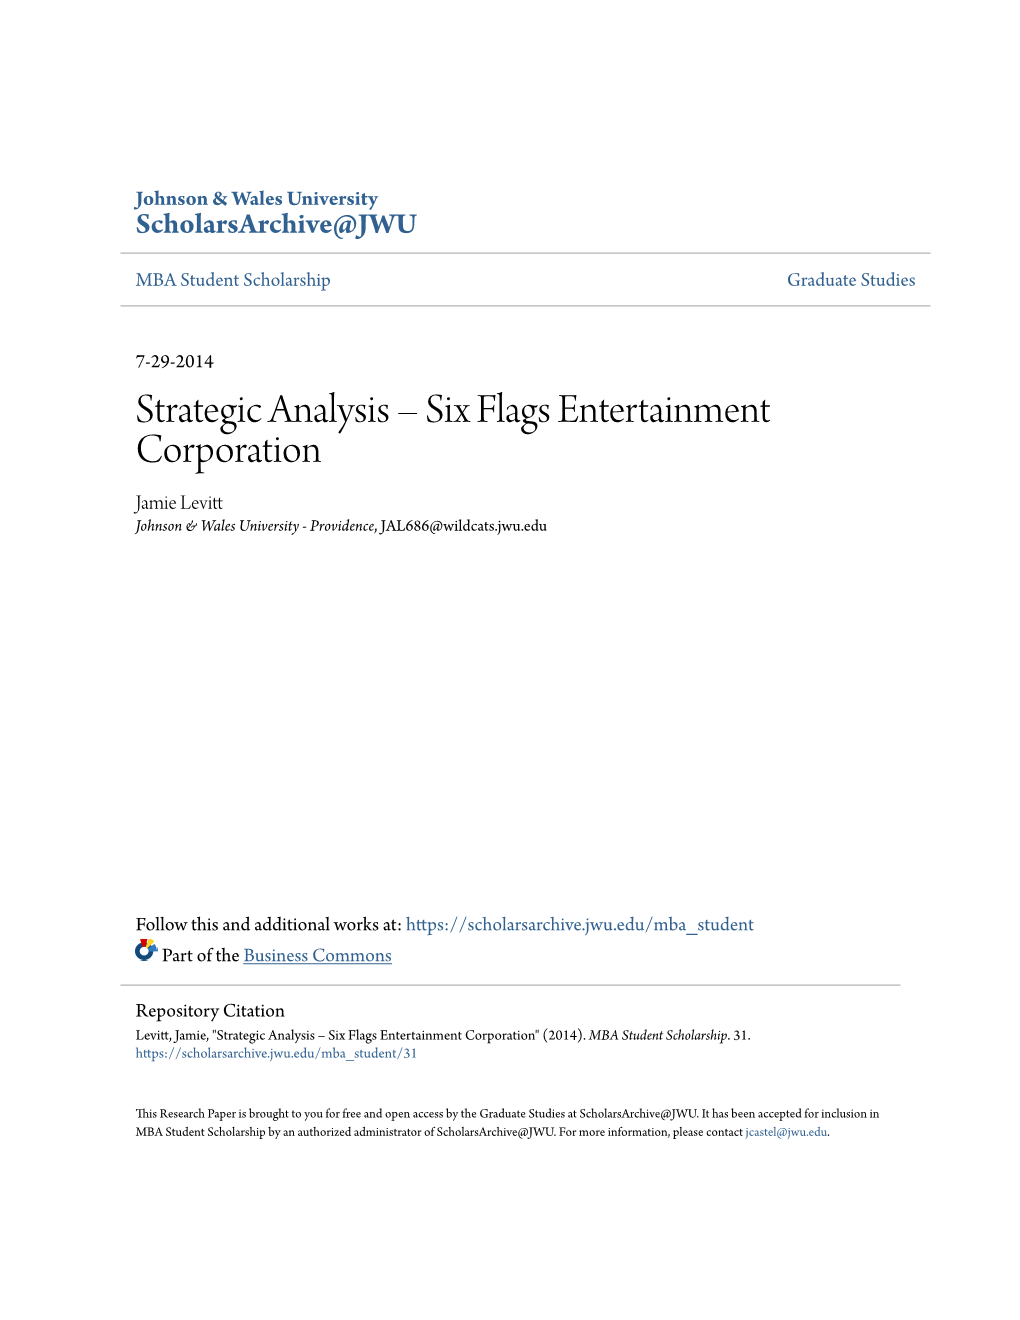 Strategic Analysis – Six Flags Entertainment Corporation Jamie Levitt Johnson & Wales University - Providence, JAL686@Wildcats.Jwu.Edu